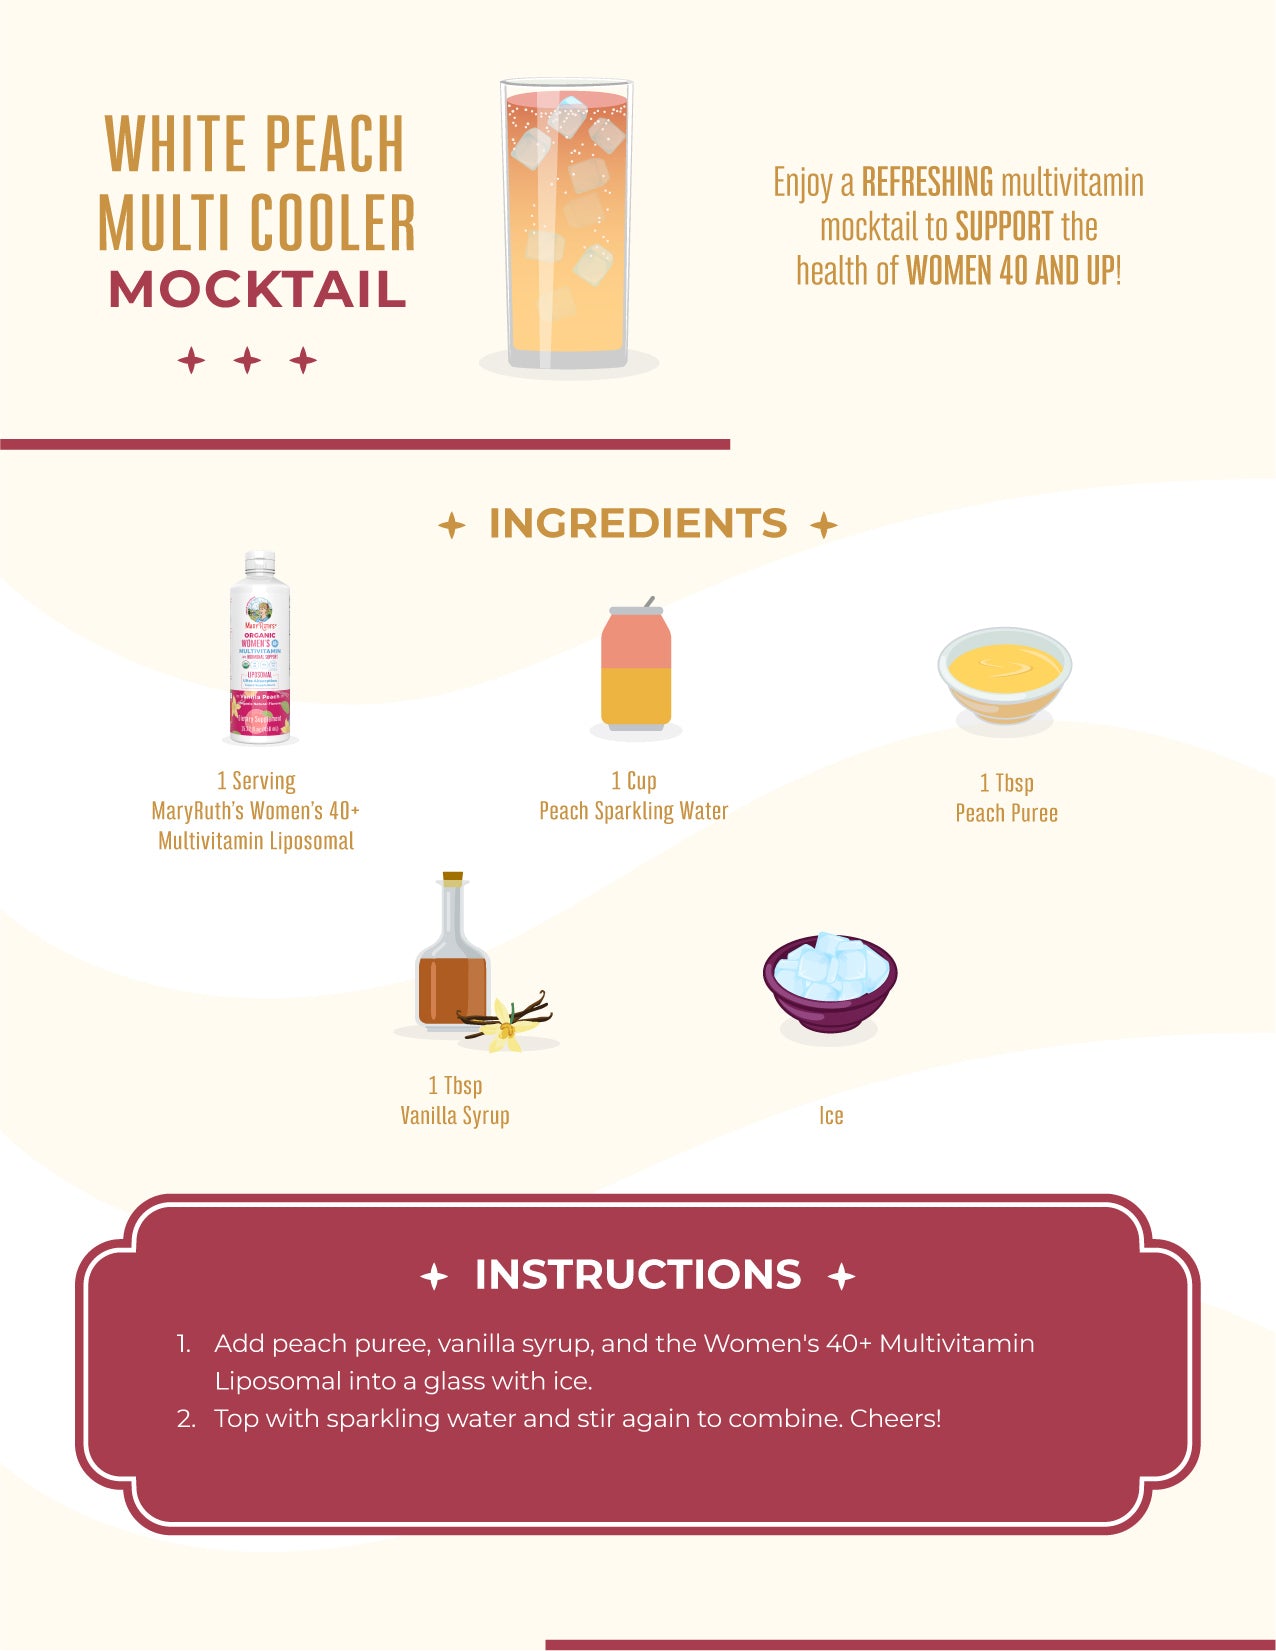 White Peach Cooler Multi Mocktail Recipe Card